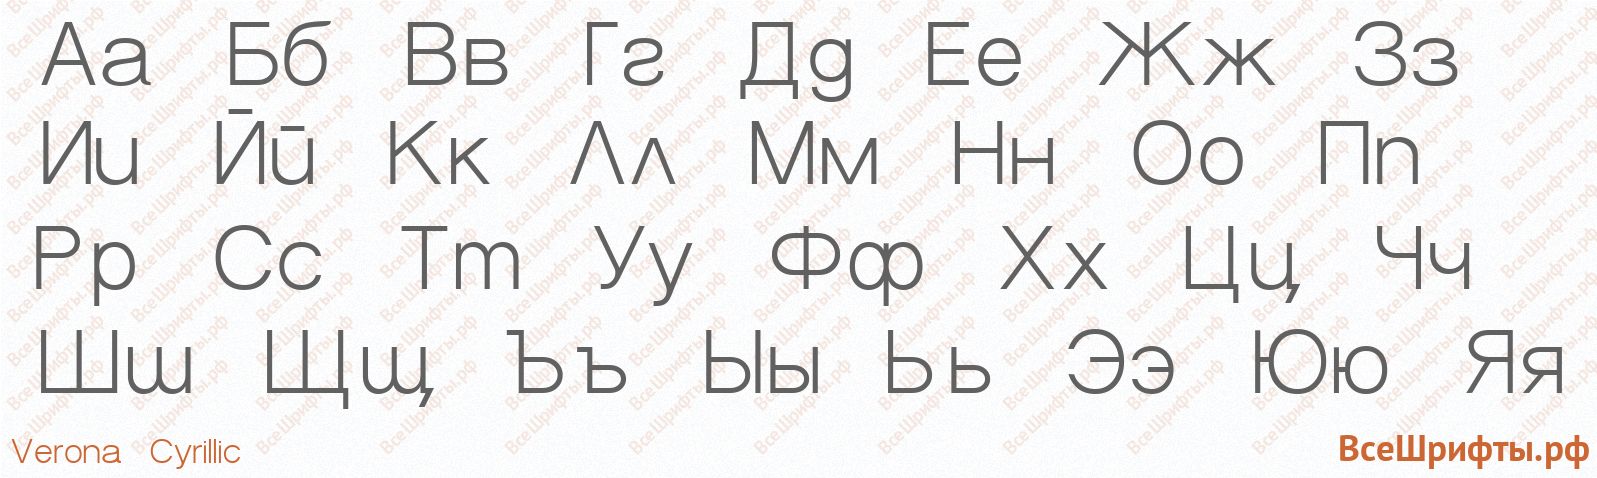 Шрифт Verona Cyrillic с русскими буквами